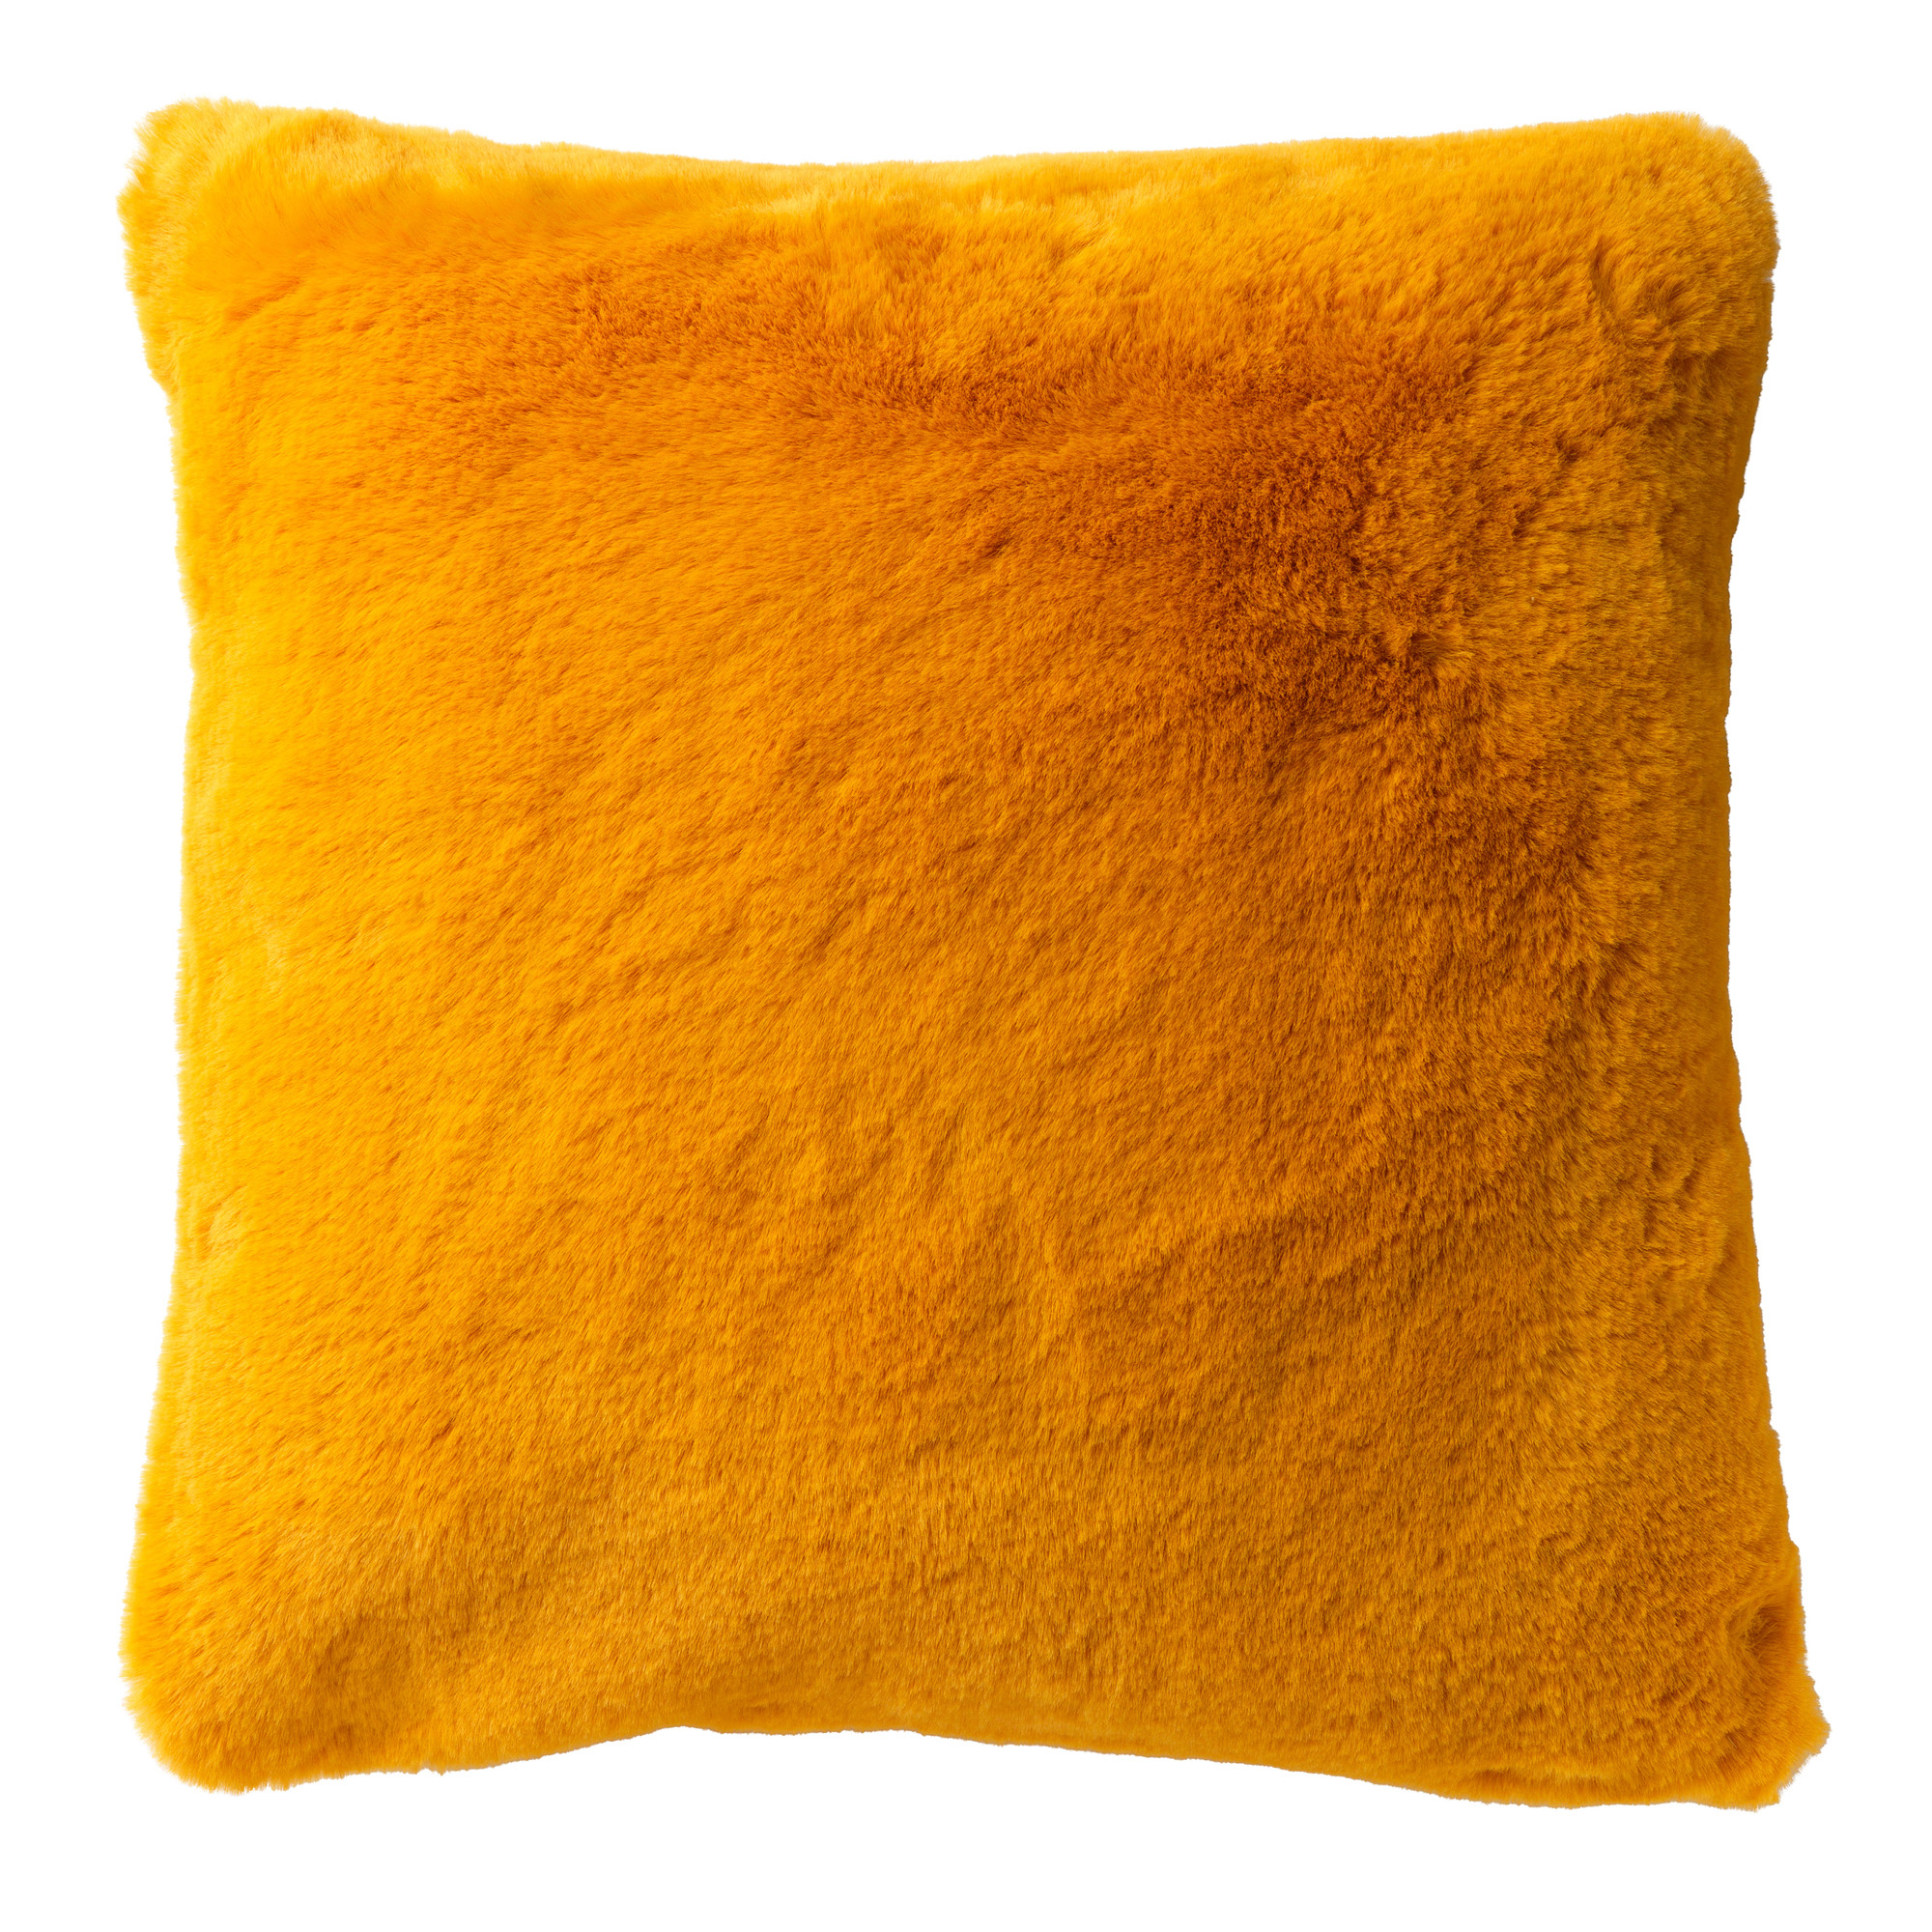 ZAYA - Kussenhoes unikleur 60x60 cm Golden Glow - superzacht - geel